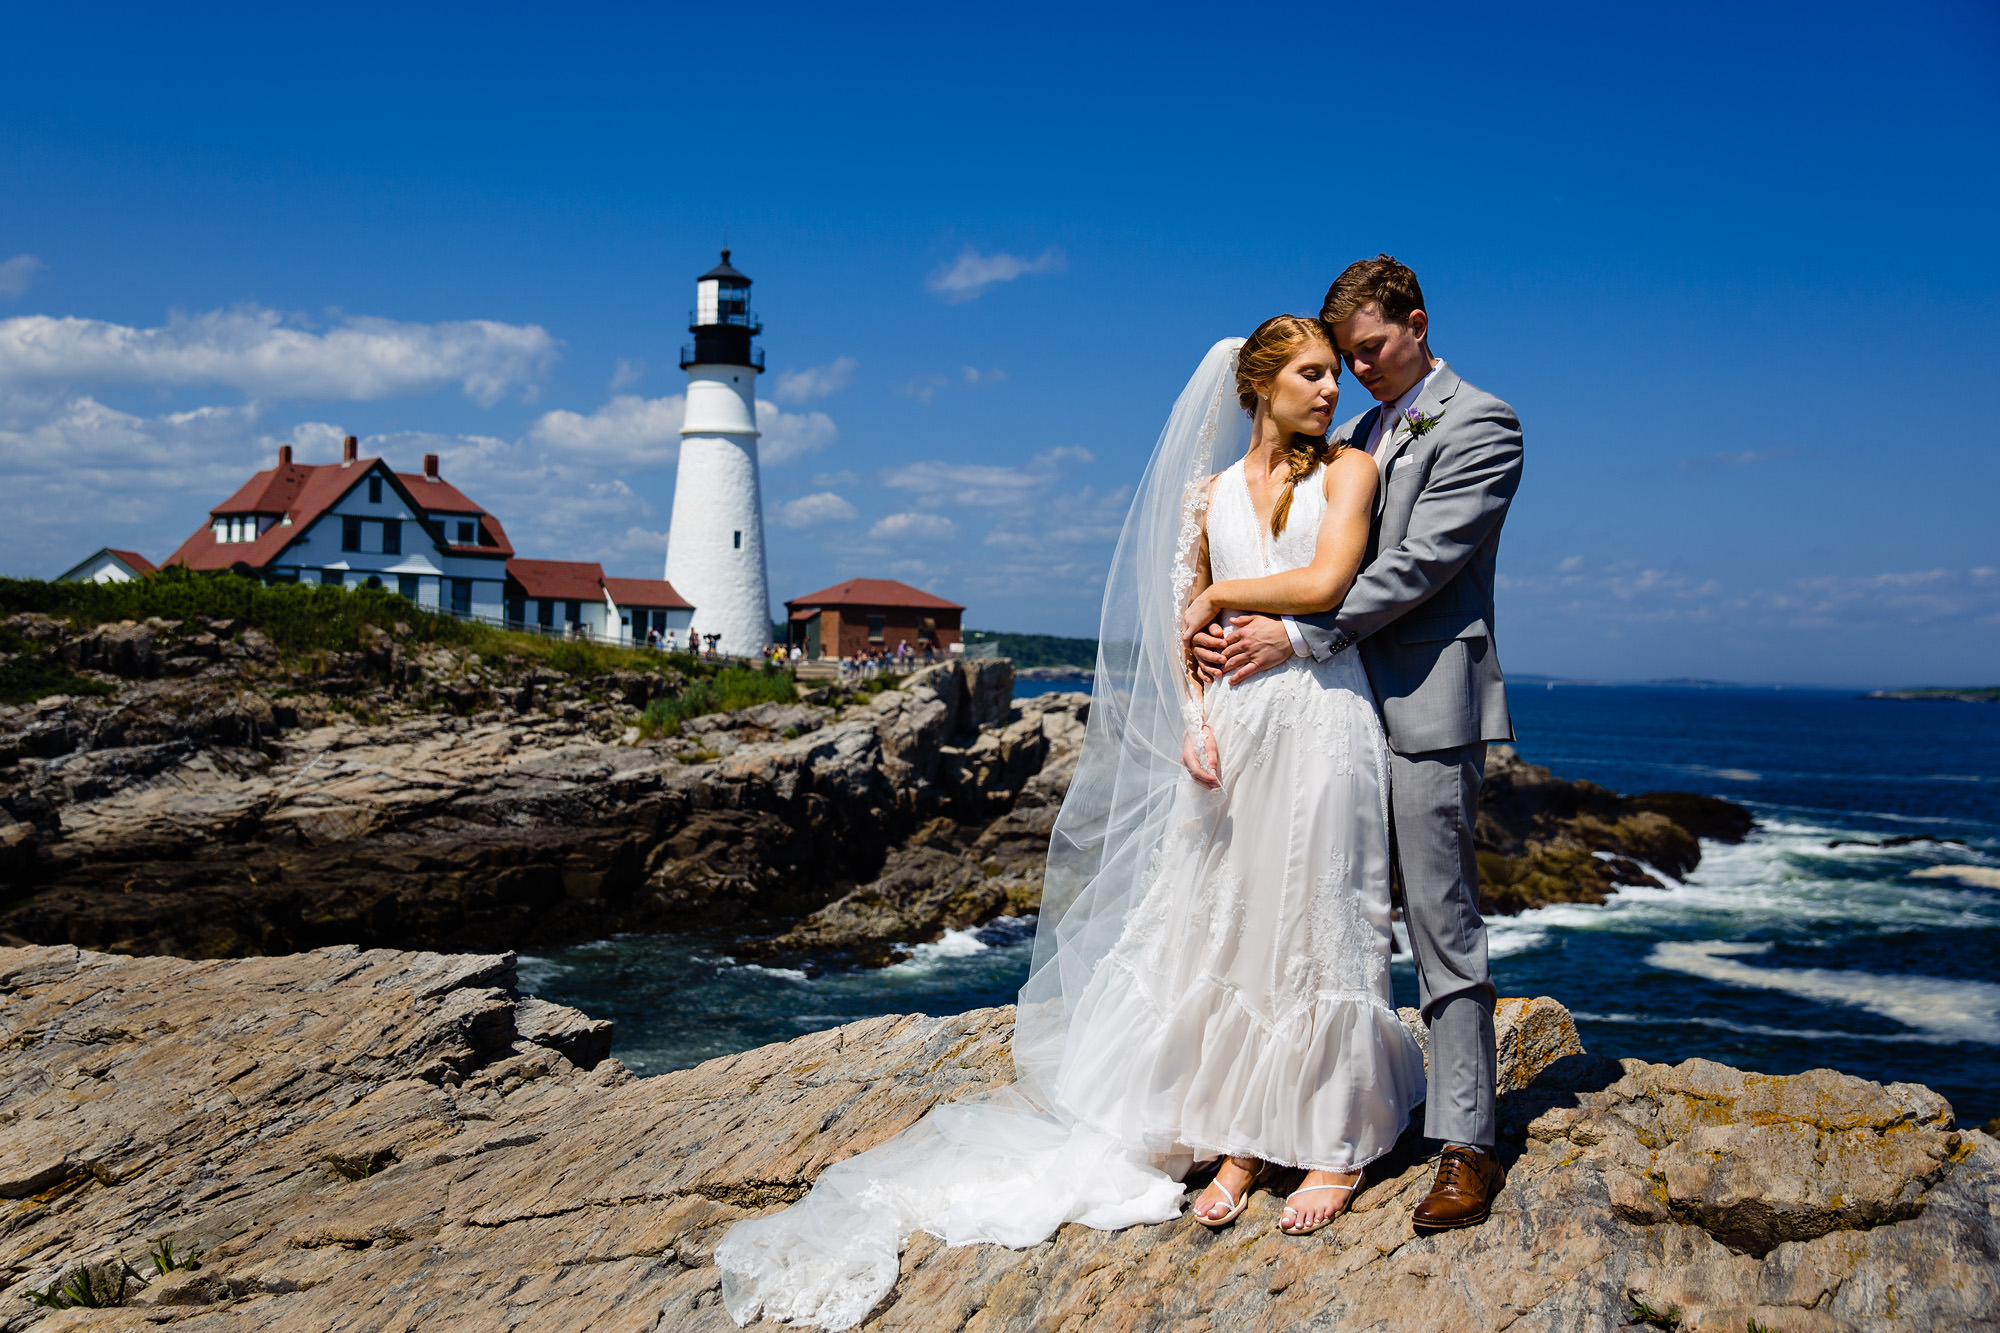 A wedding portrait taken at the Portland Headlight in Cape Elizabeth, Maine